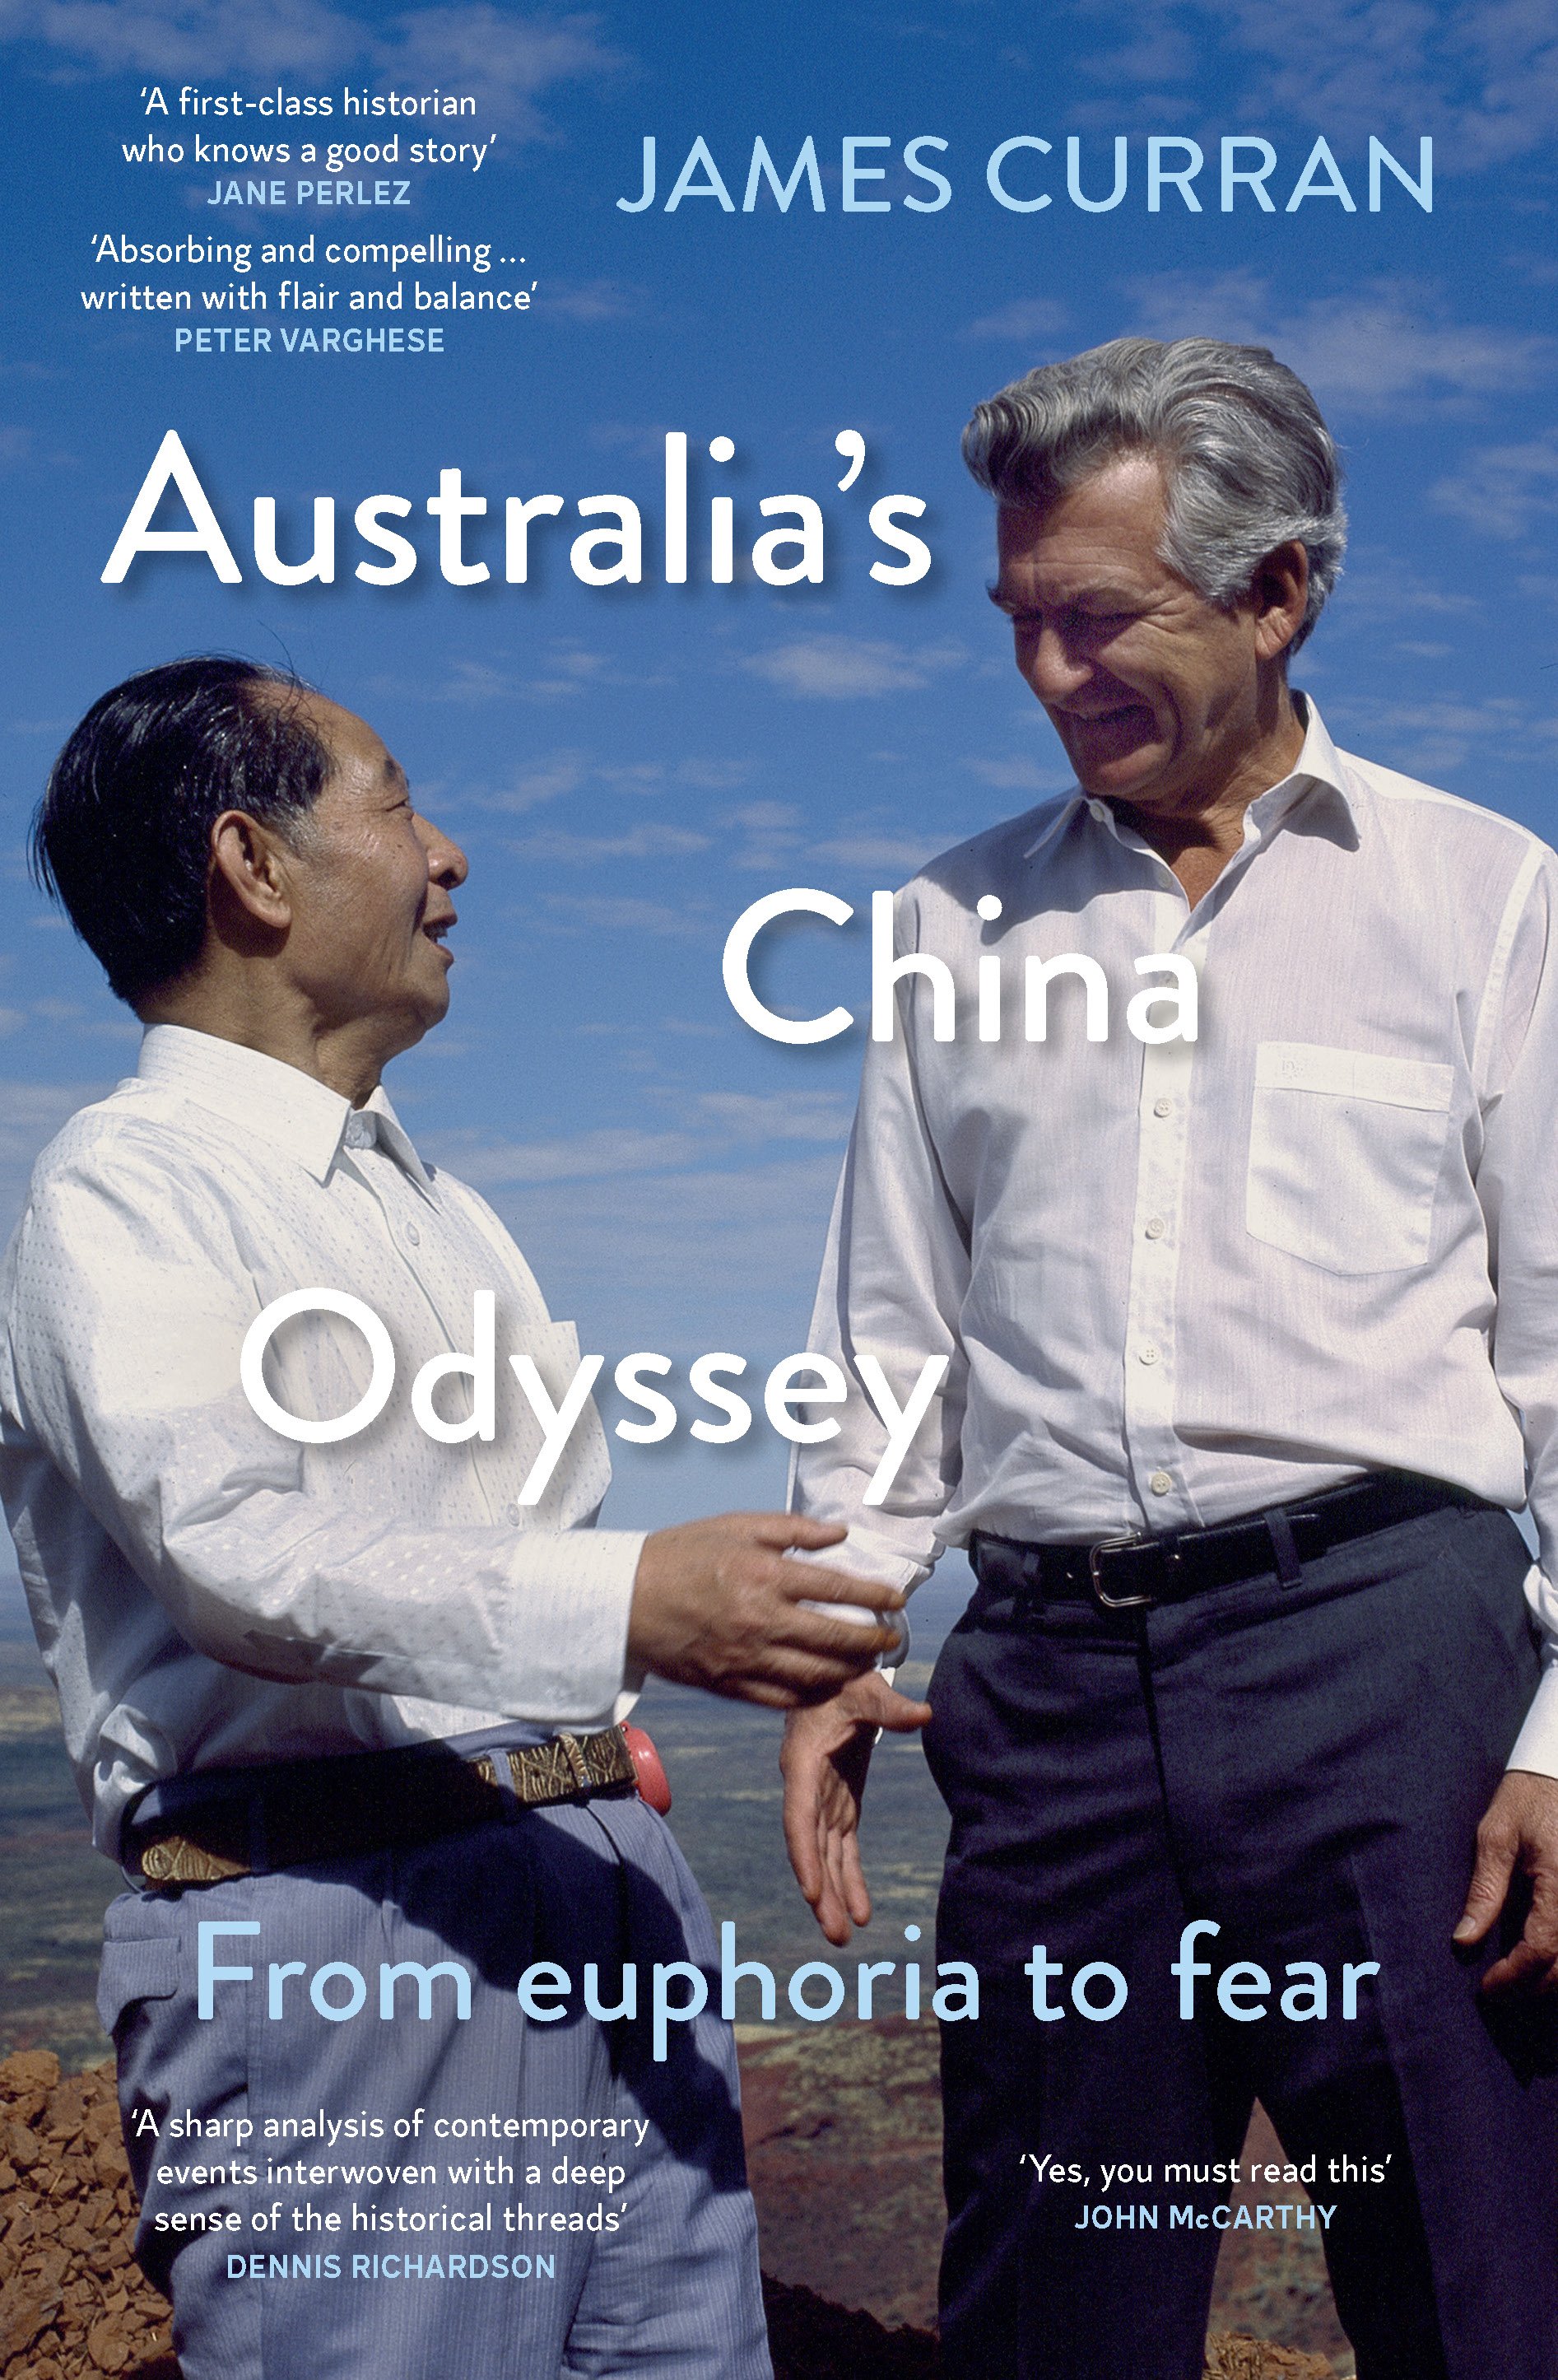 Australia's China Odyssey by James Curran